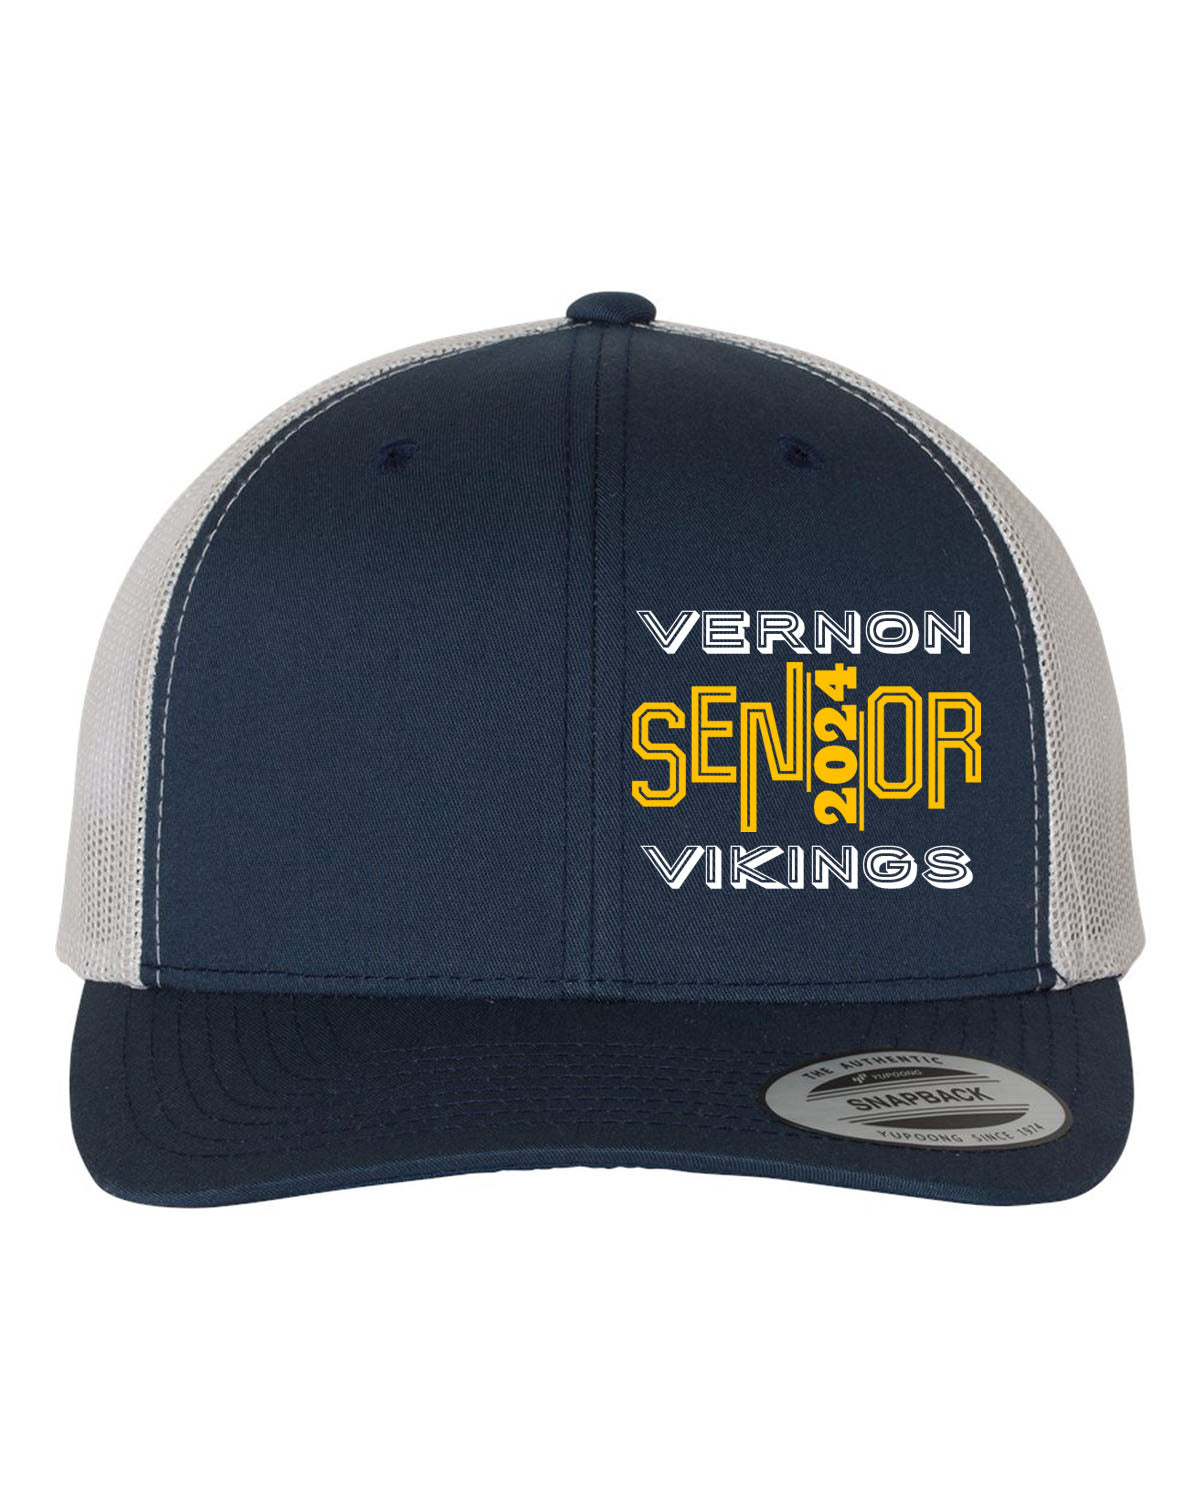 VTHS Design 6 Trucker Hat